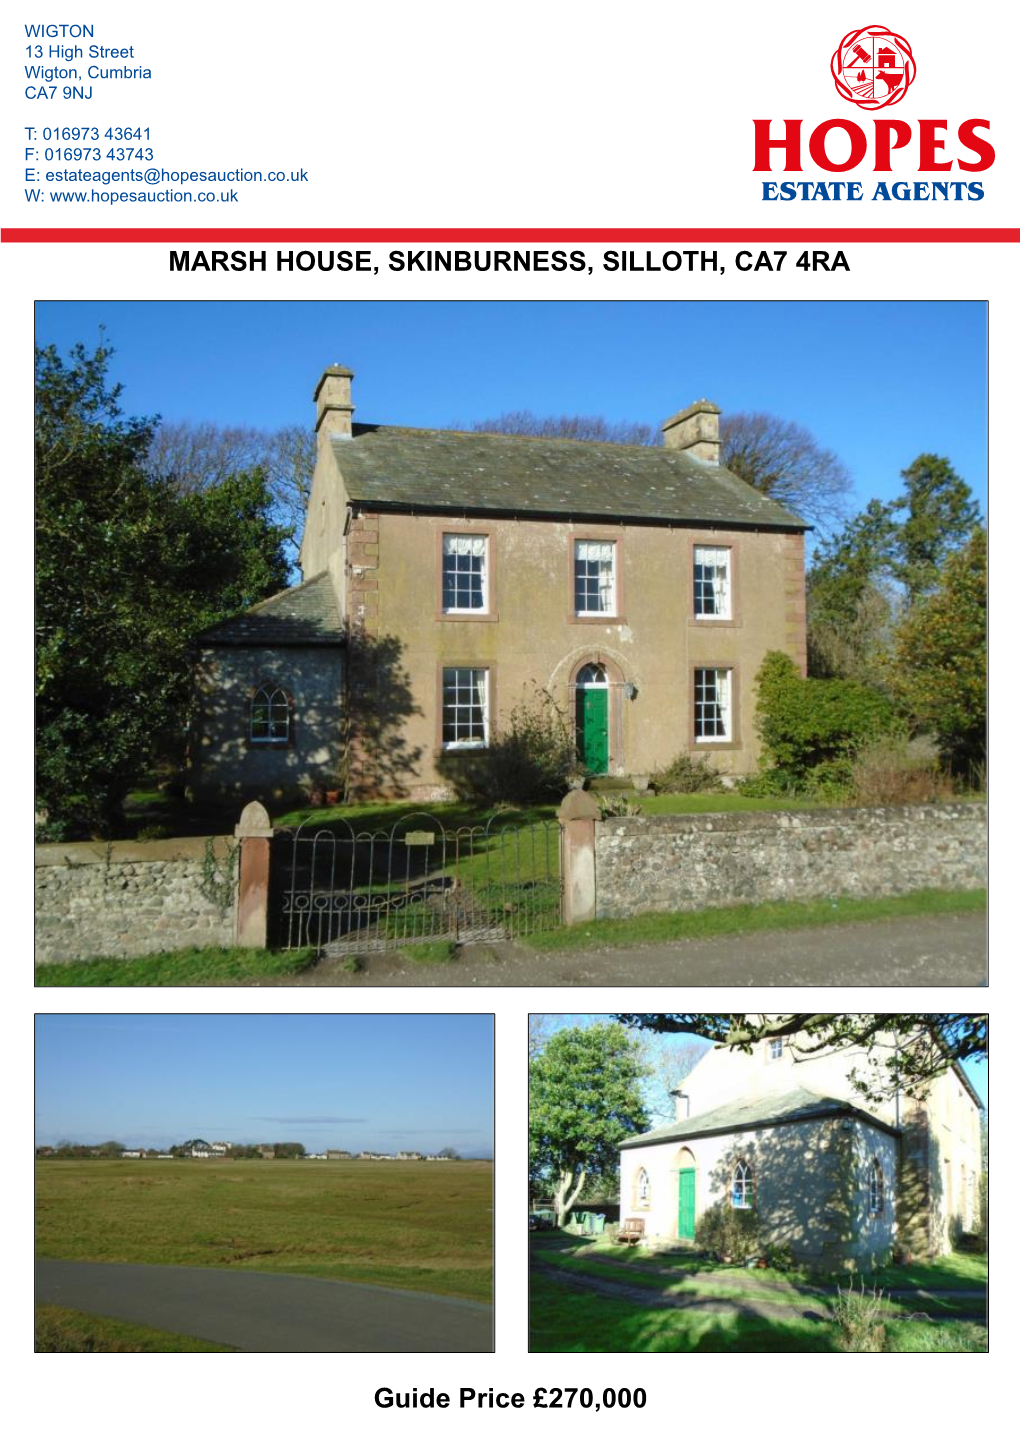 Marsh House, Skinburness, Silloth, Ca7 4Ra